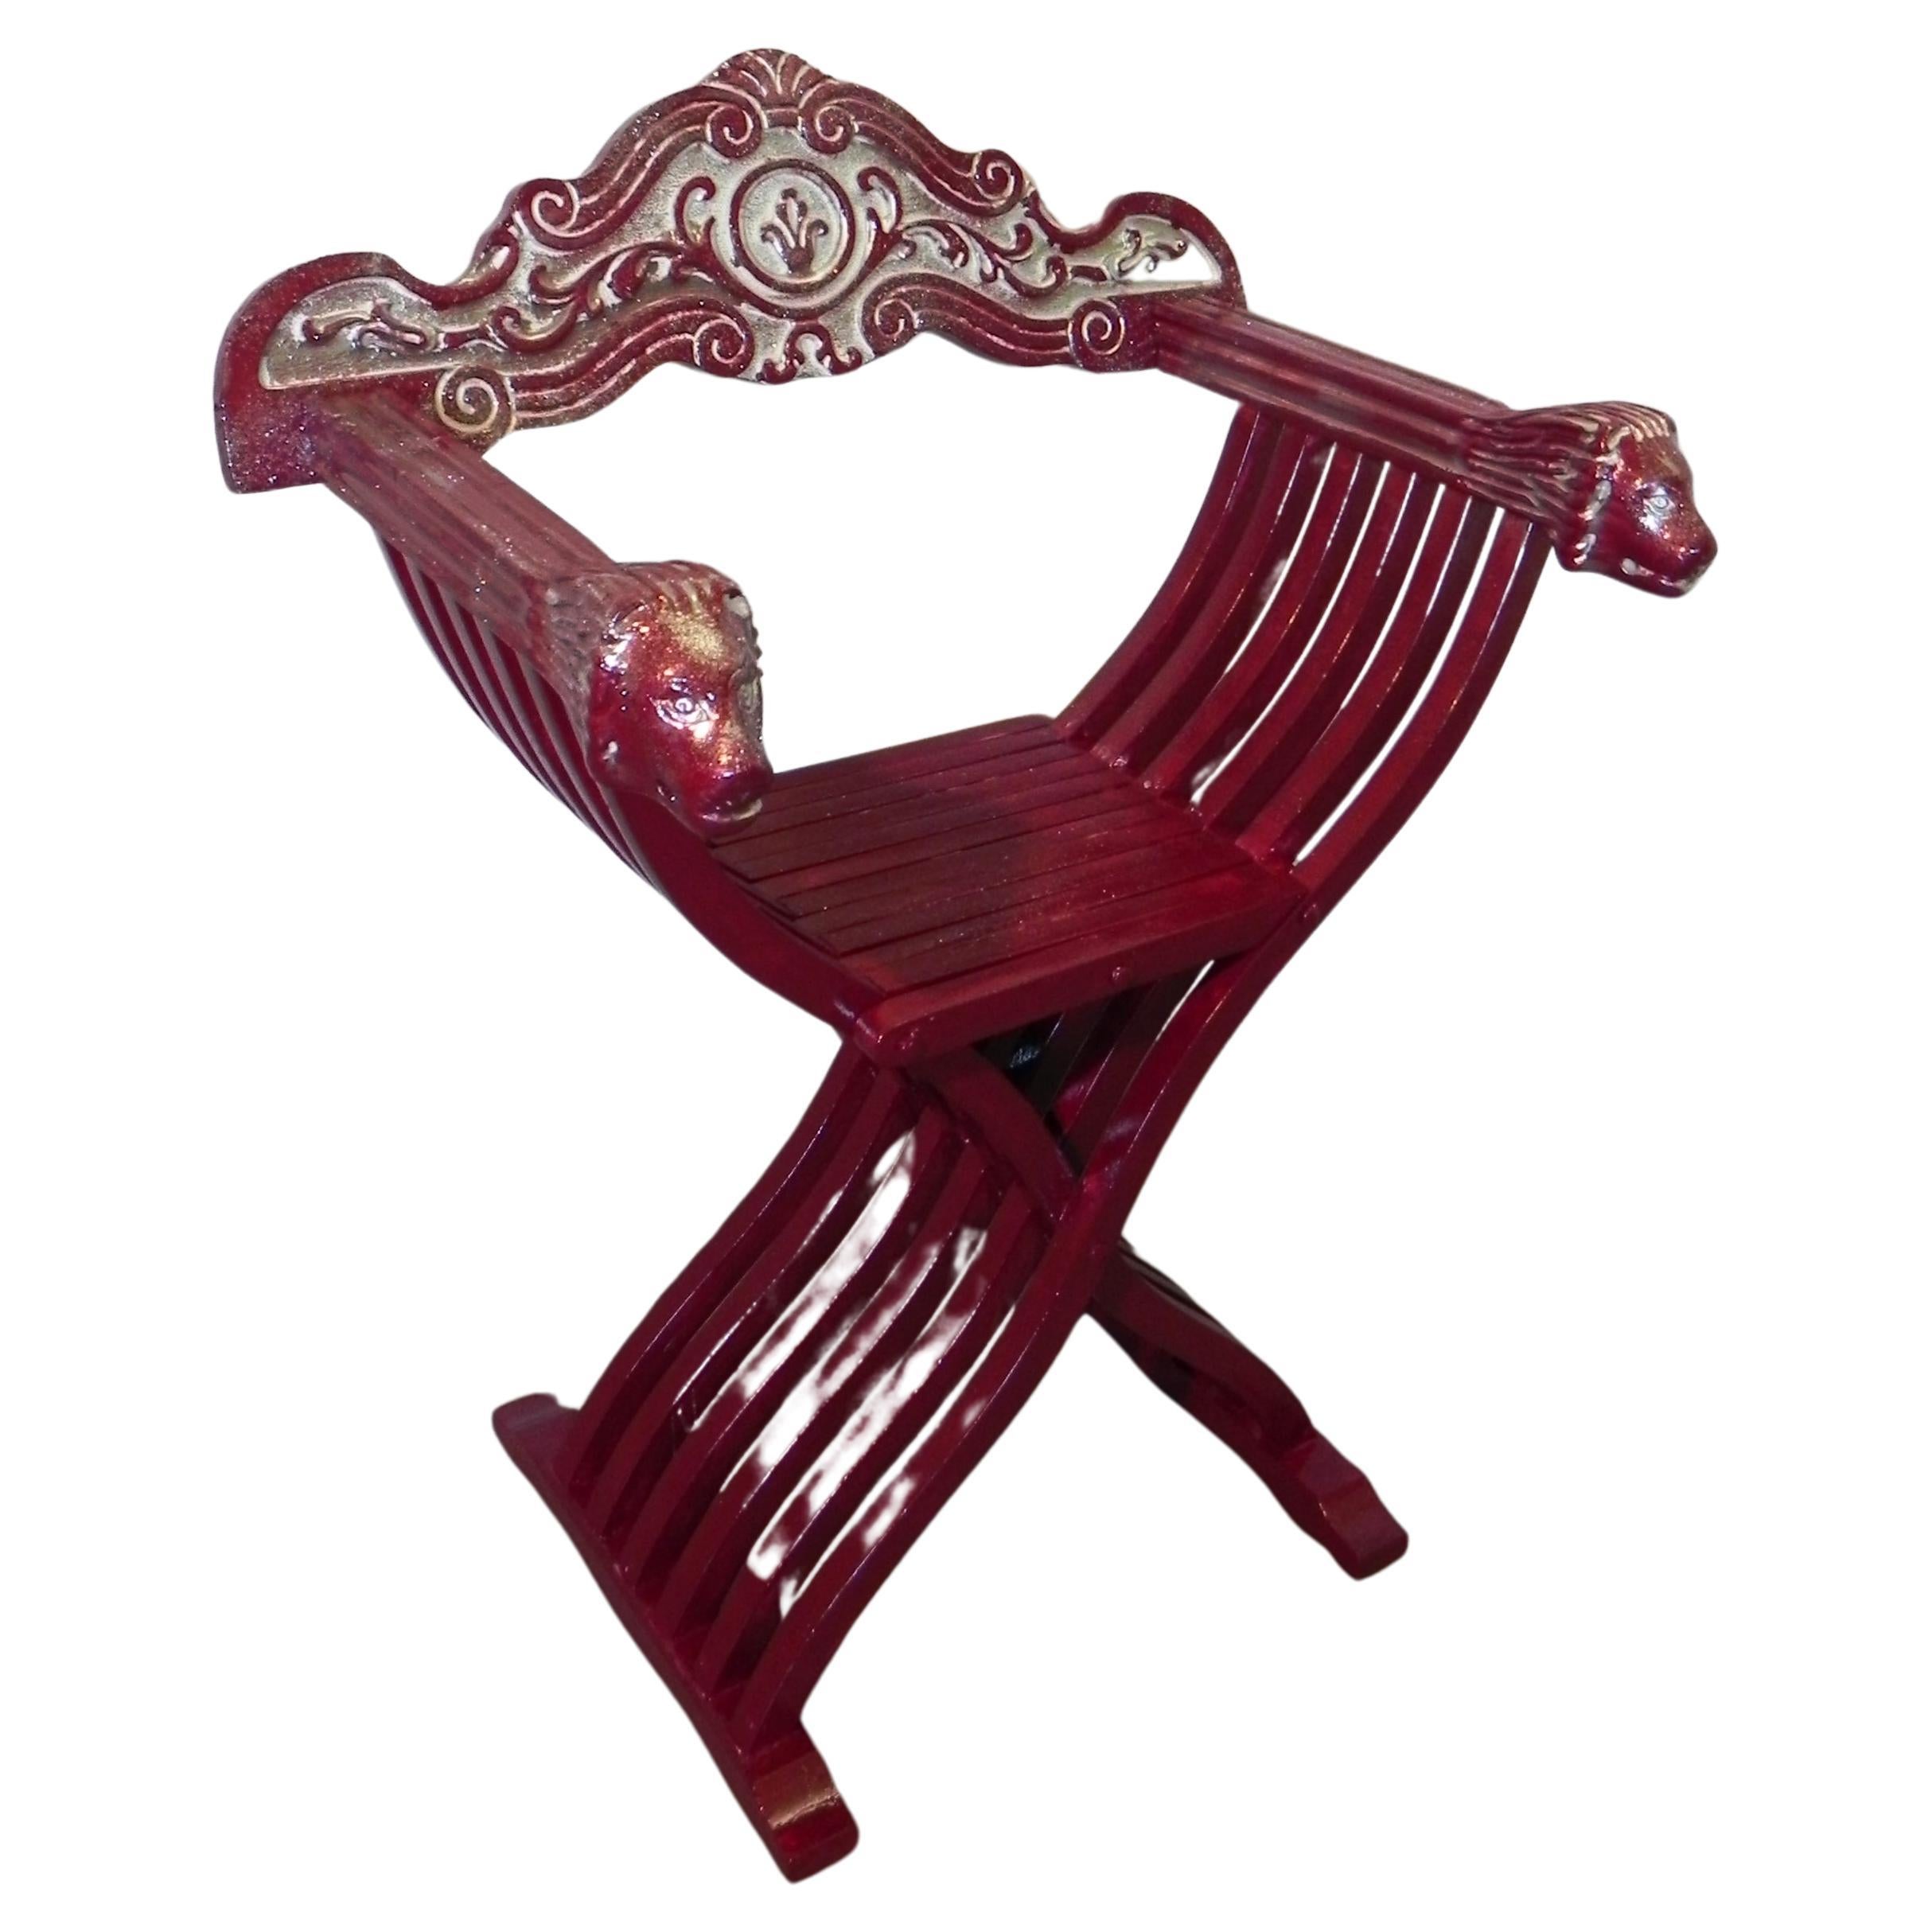 savonarola Chair, Red Throne For Sale